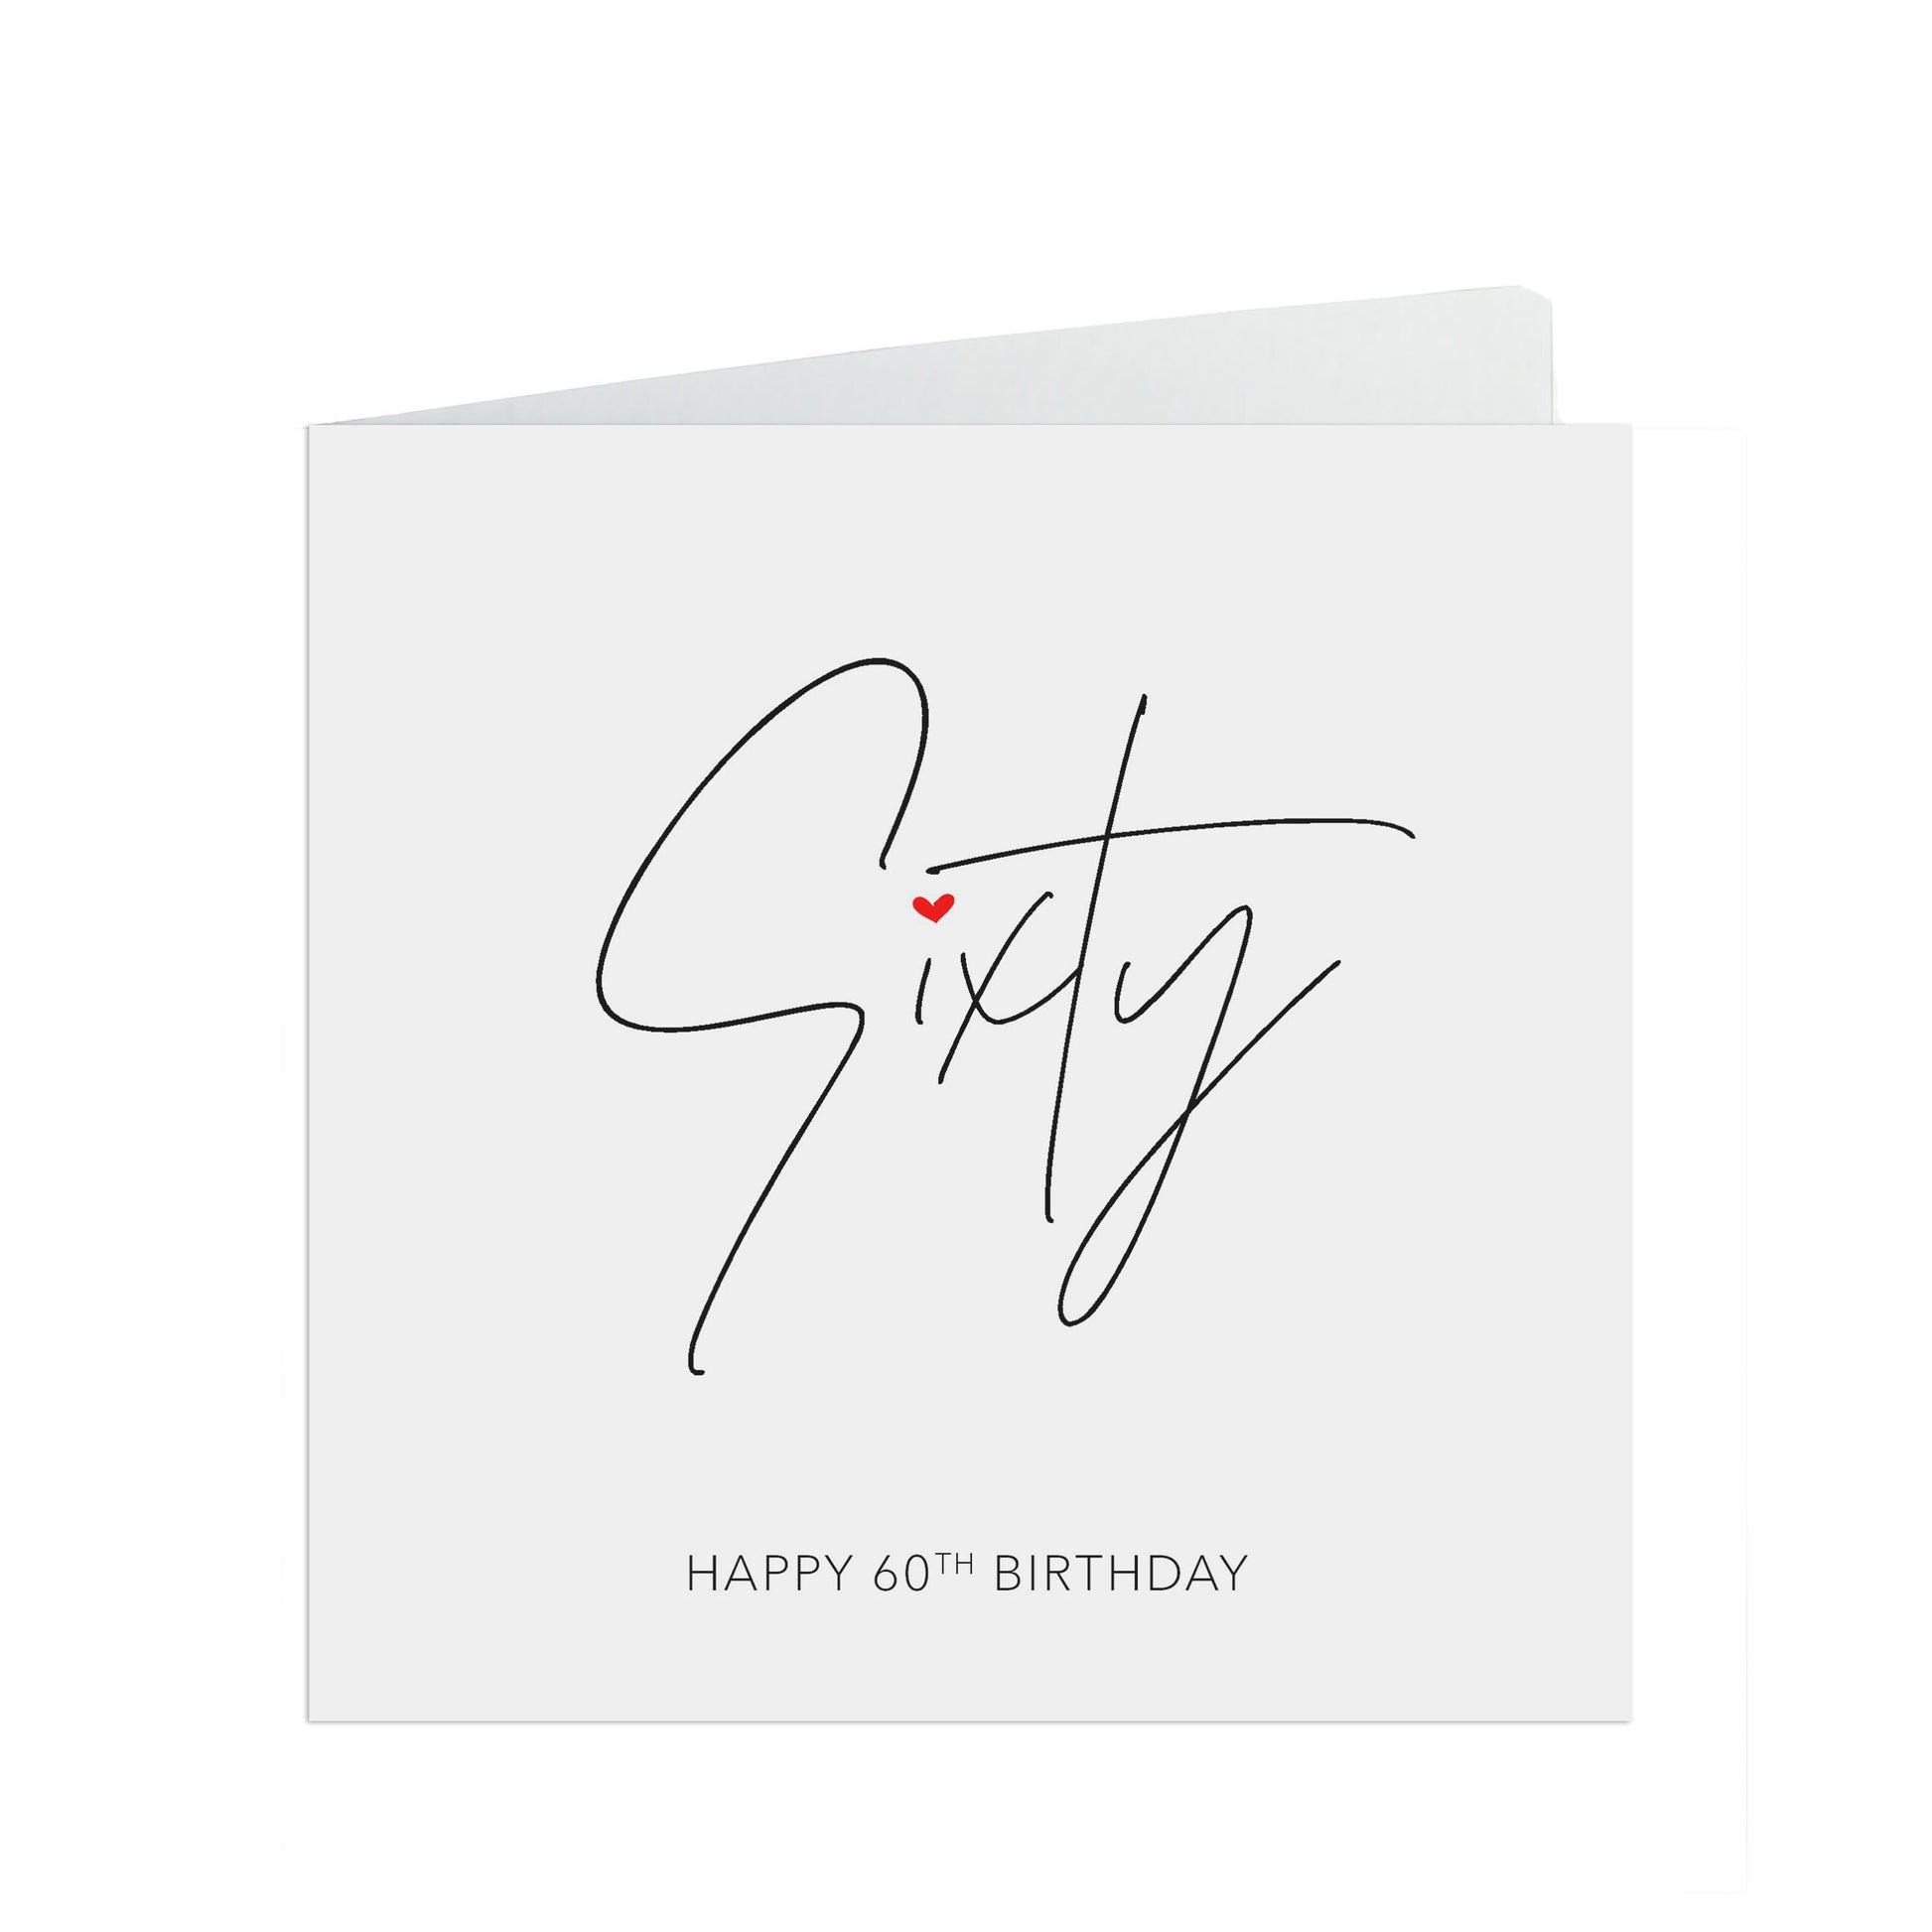 60th Birthday Card, Sixty Simple Card Design